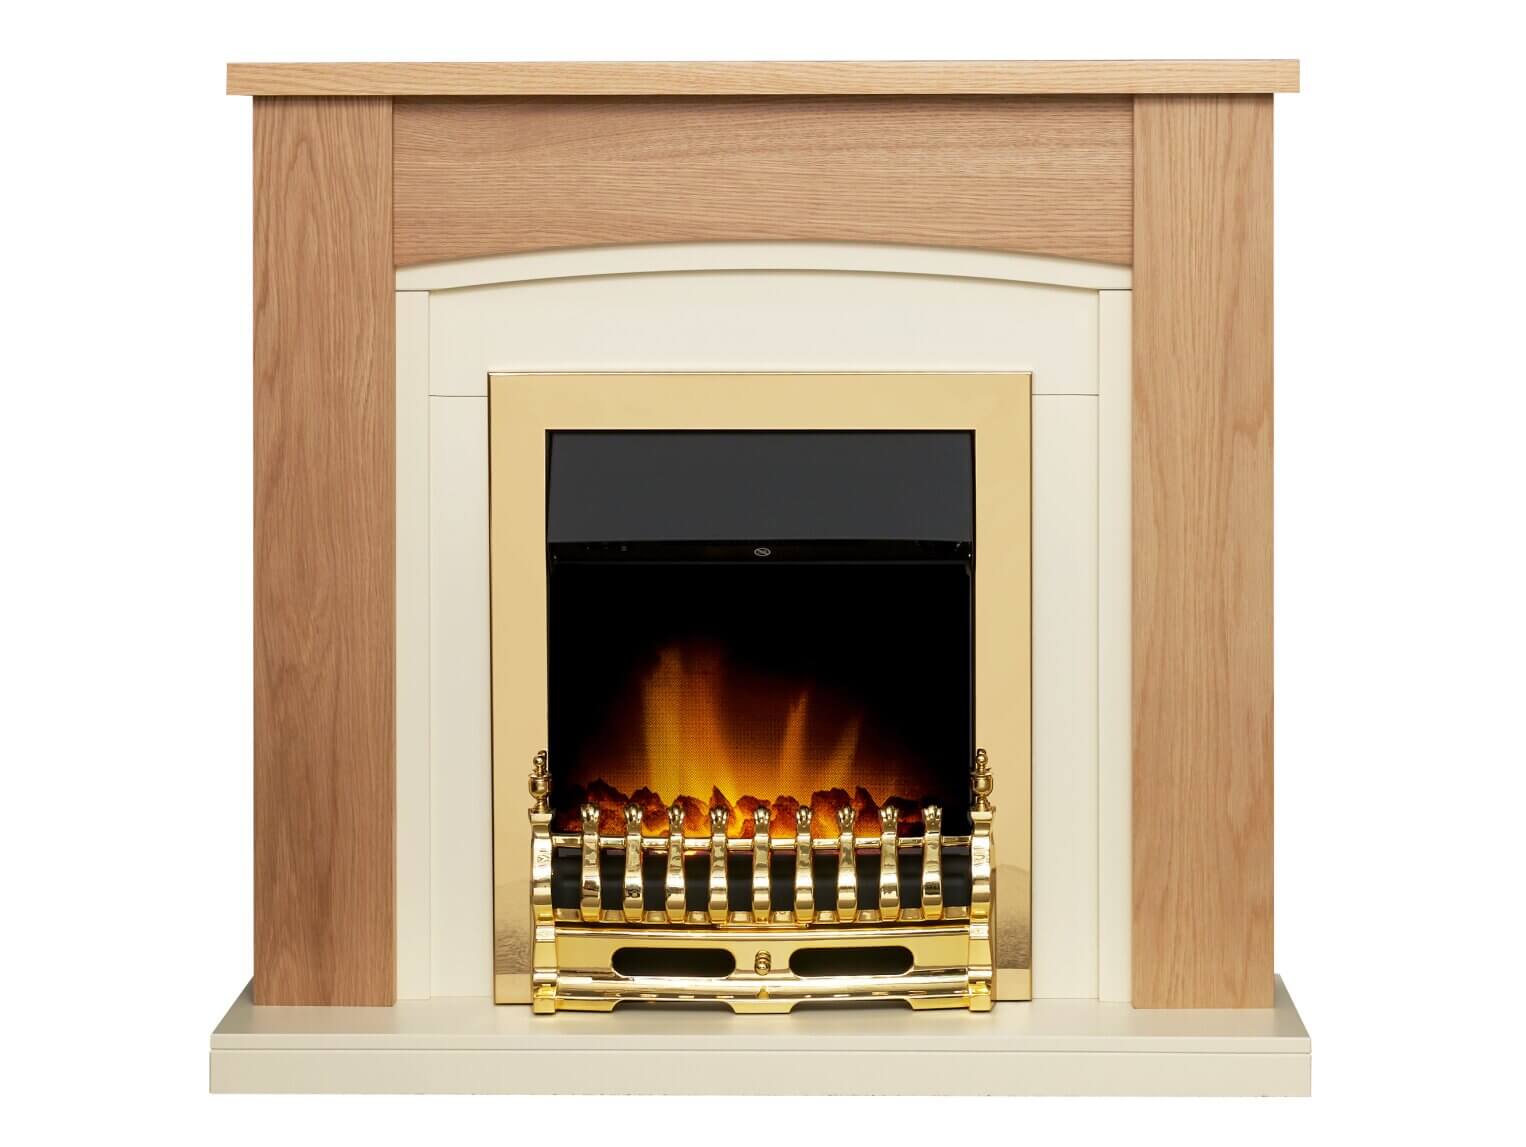 Adam Chilton Fireplace in Oak & Cream with Blenheim Electric Fire - Glowing Flames